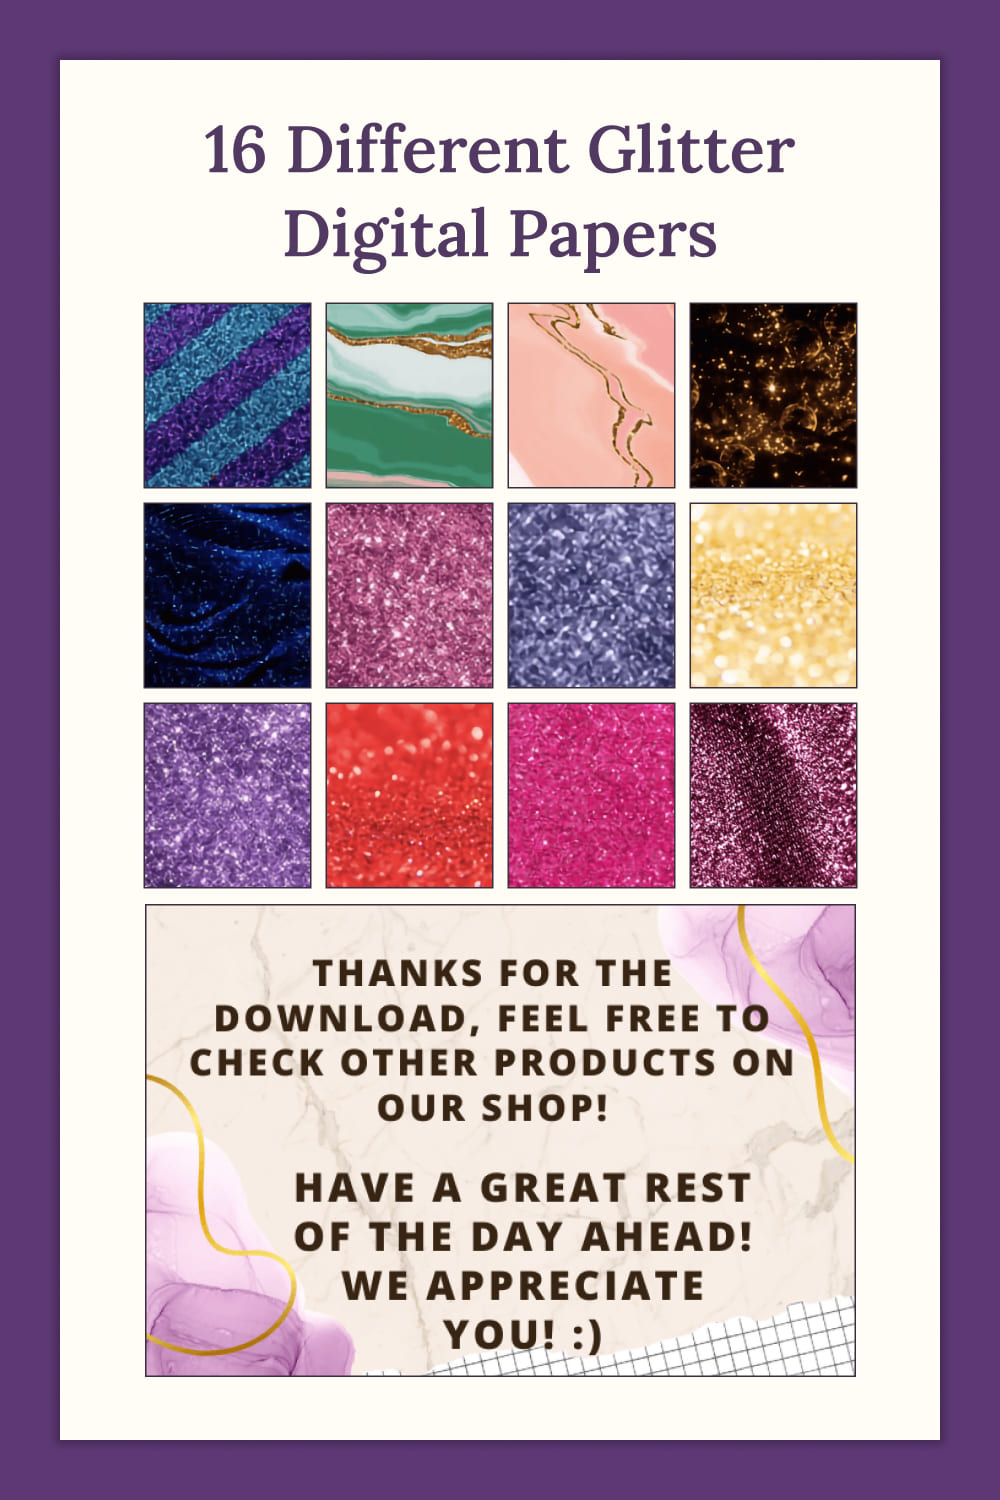 16 Different Glitter Digital Papers - Pinterest.